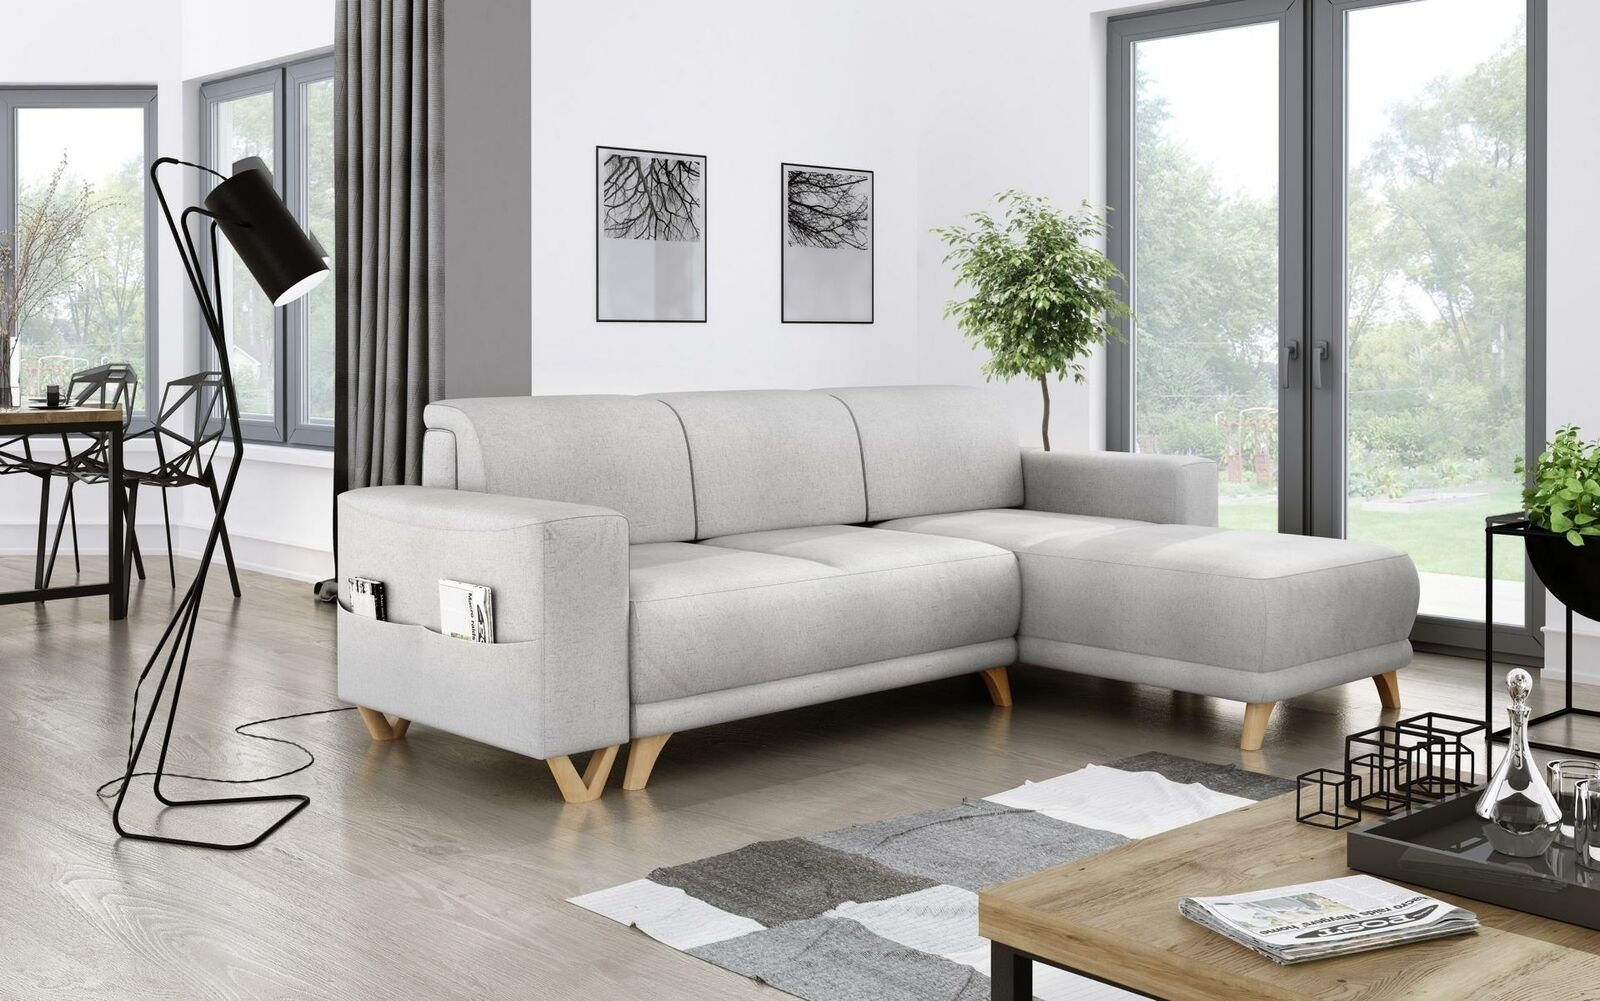 JVmoebel Sofa Design Ecksofa L-Form Mit Textil Grau Bettfunktion Couch Sofa Polster Bettfunkt, Schlafsofa